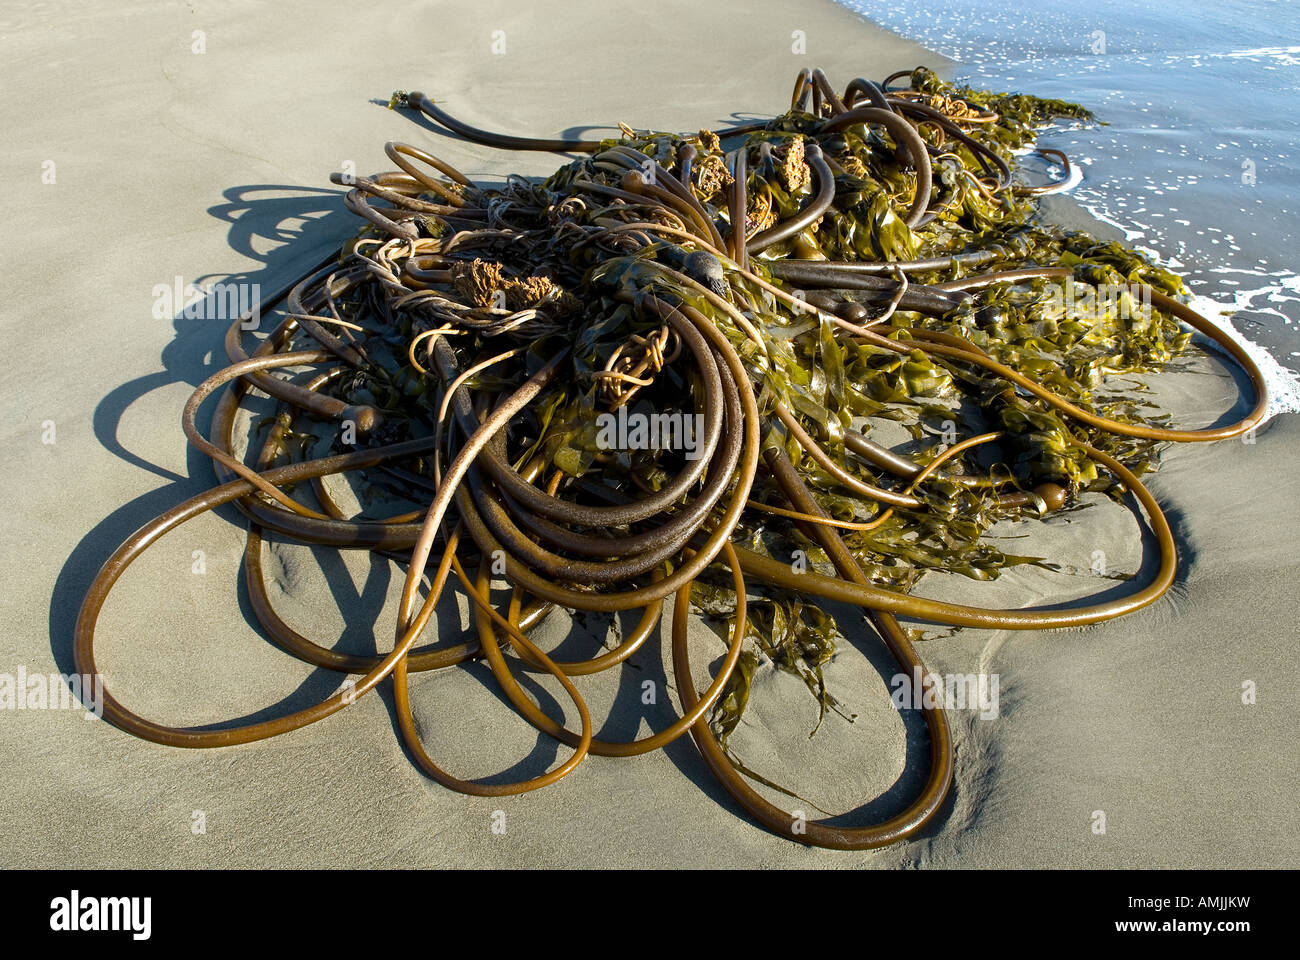 Giant sea weed on sandy beach, Northern California, USA. Stock Photo